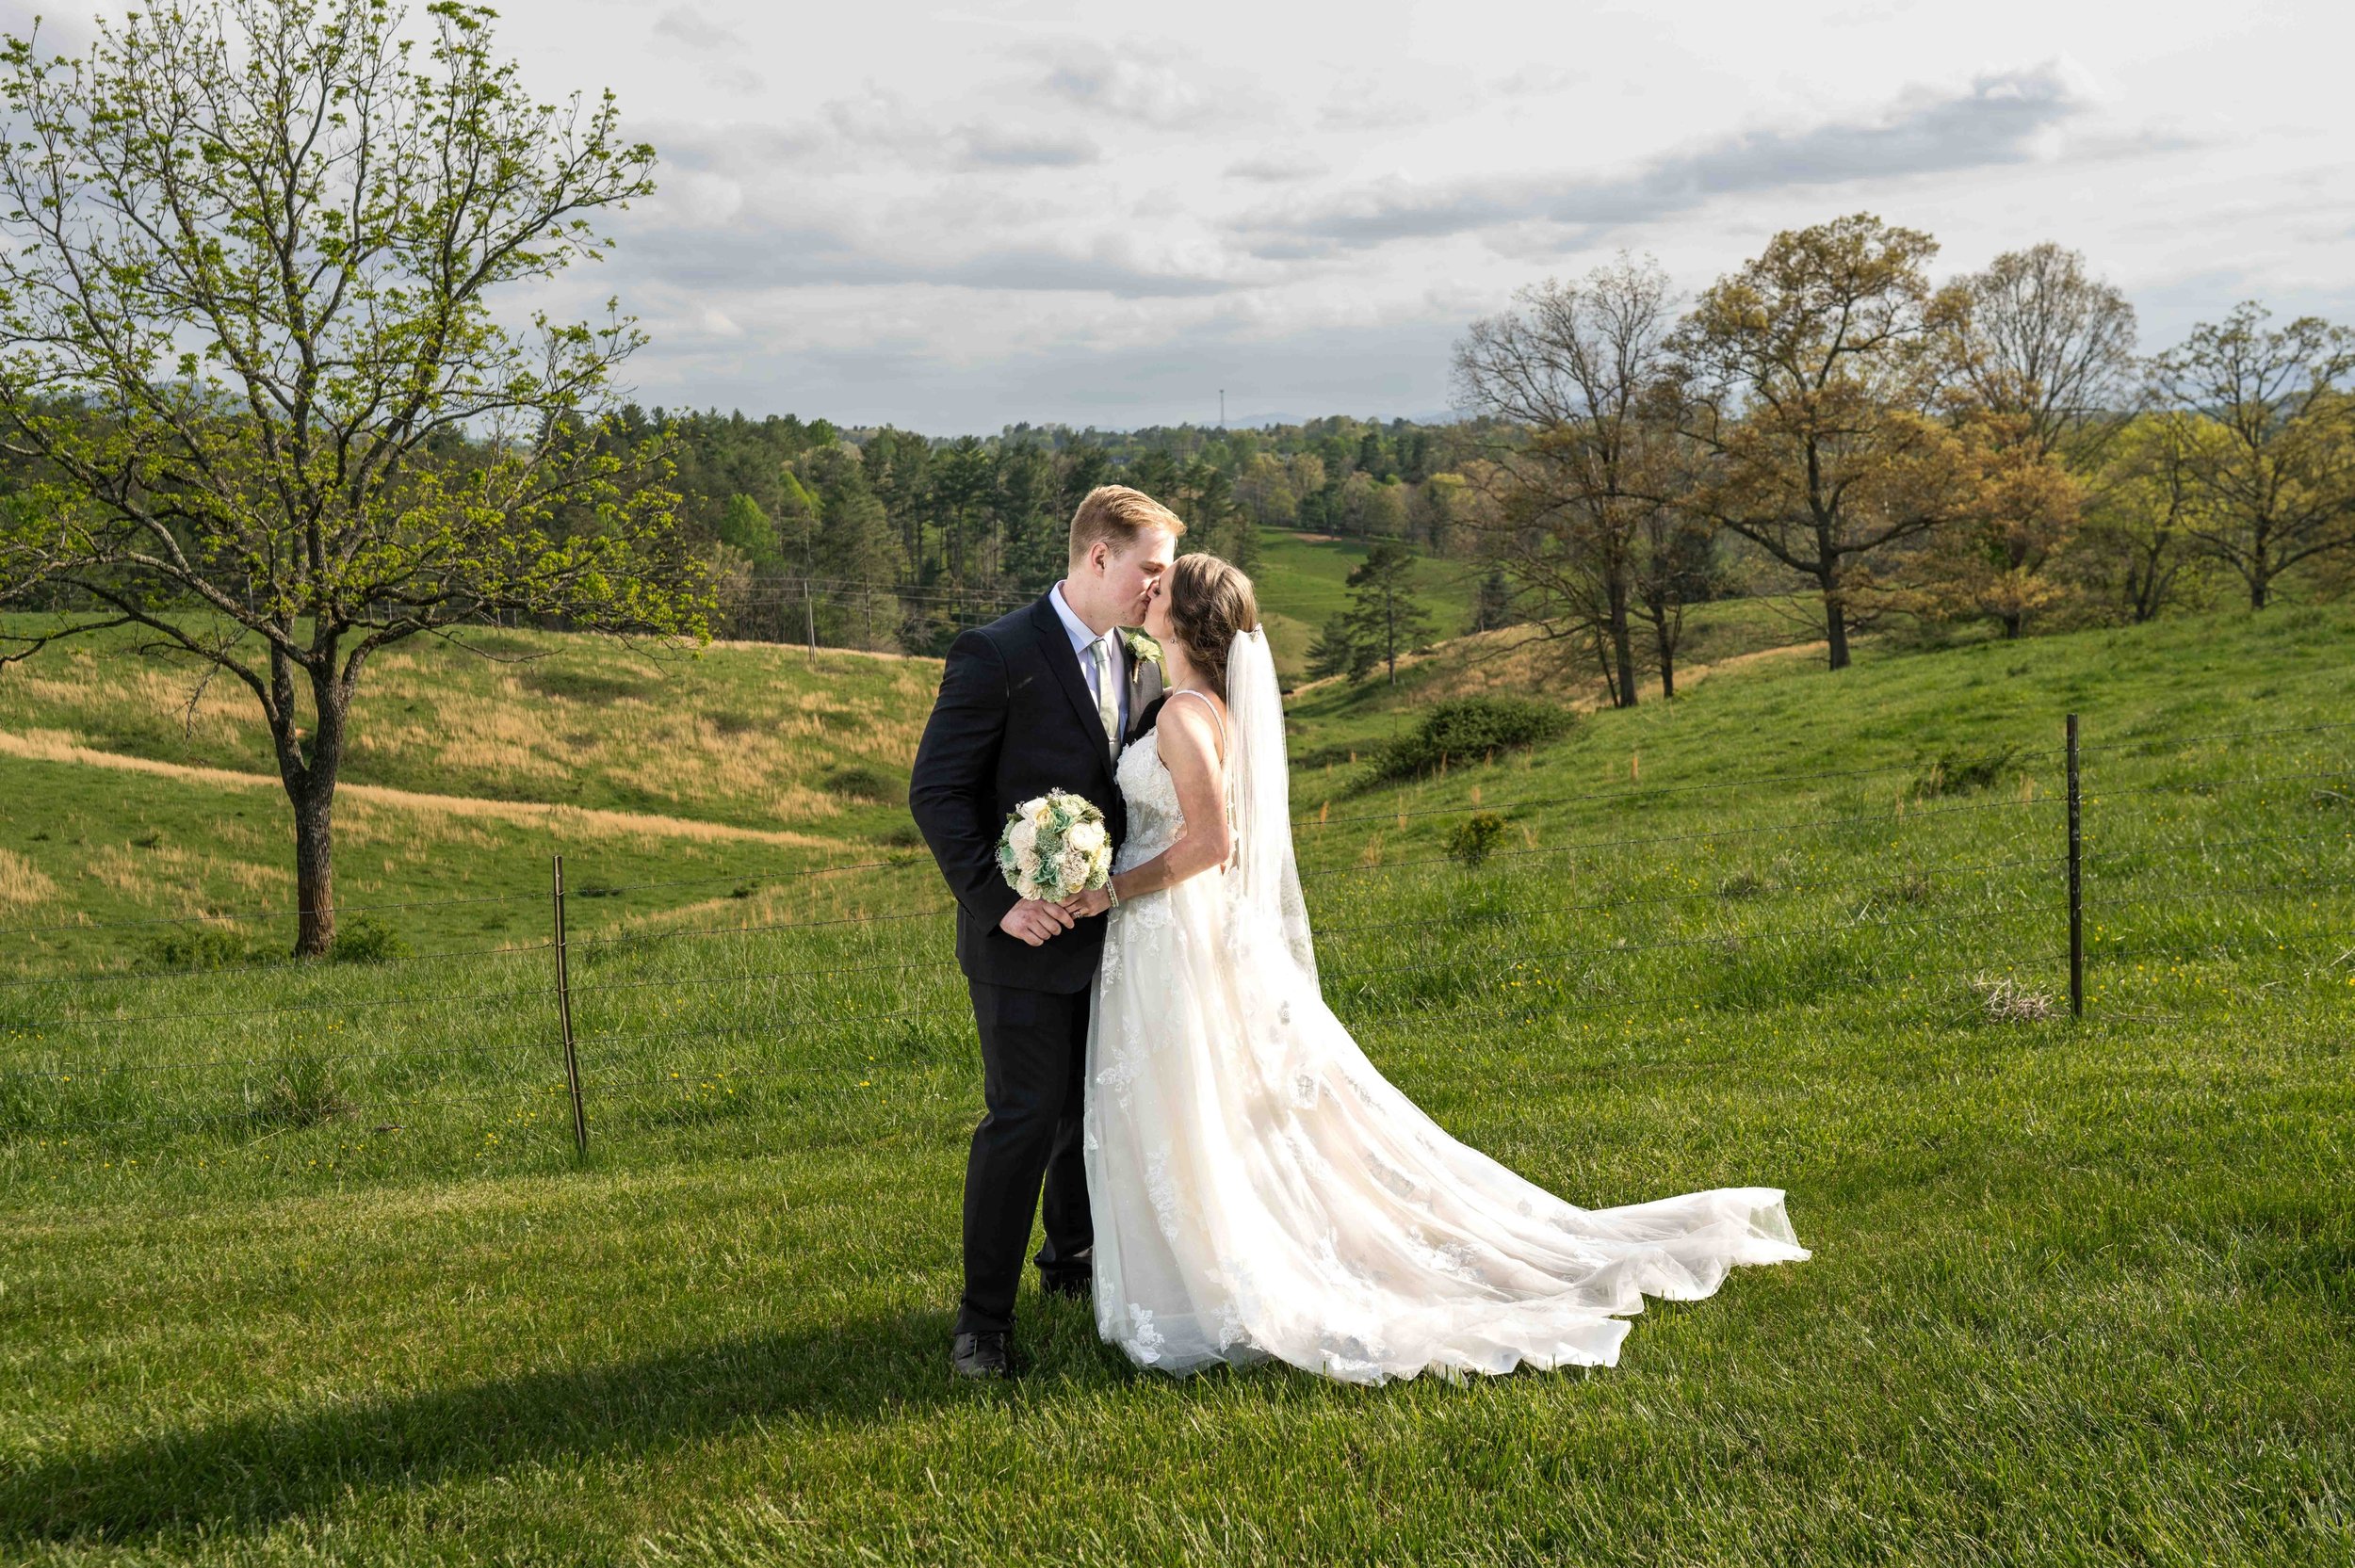 Outdoor April Wedding in Asheville North Carolina at Emerald Ridge Farm & Event Center blog 2 28.jpg